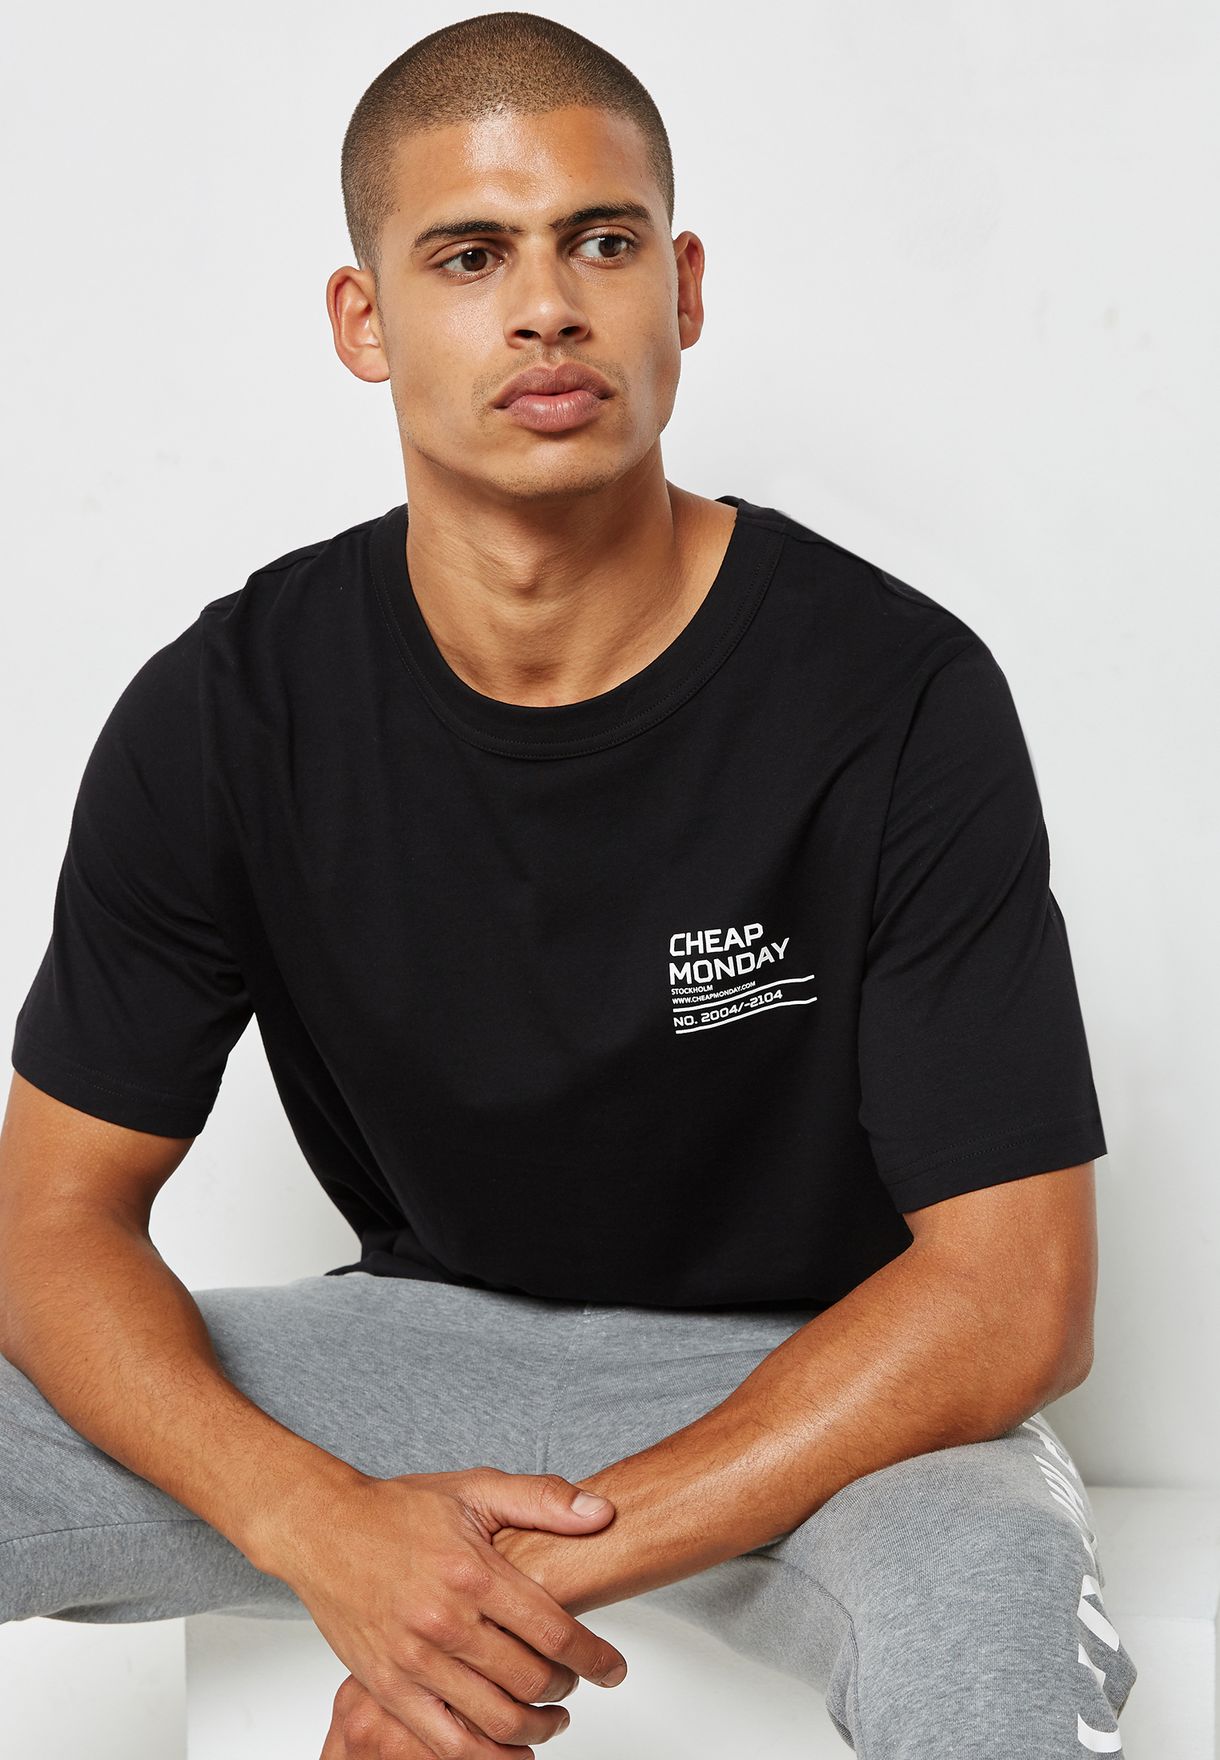 indelukke del Tranquility Buy Cheap Monday black Boxer T-Shirt for Men in MENA, Worldwide